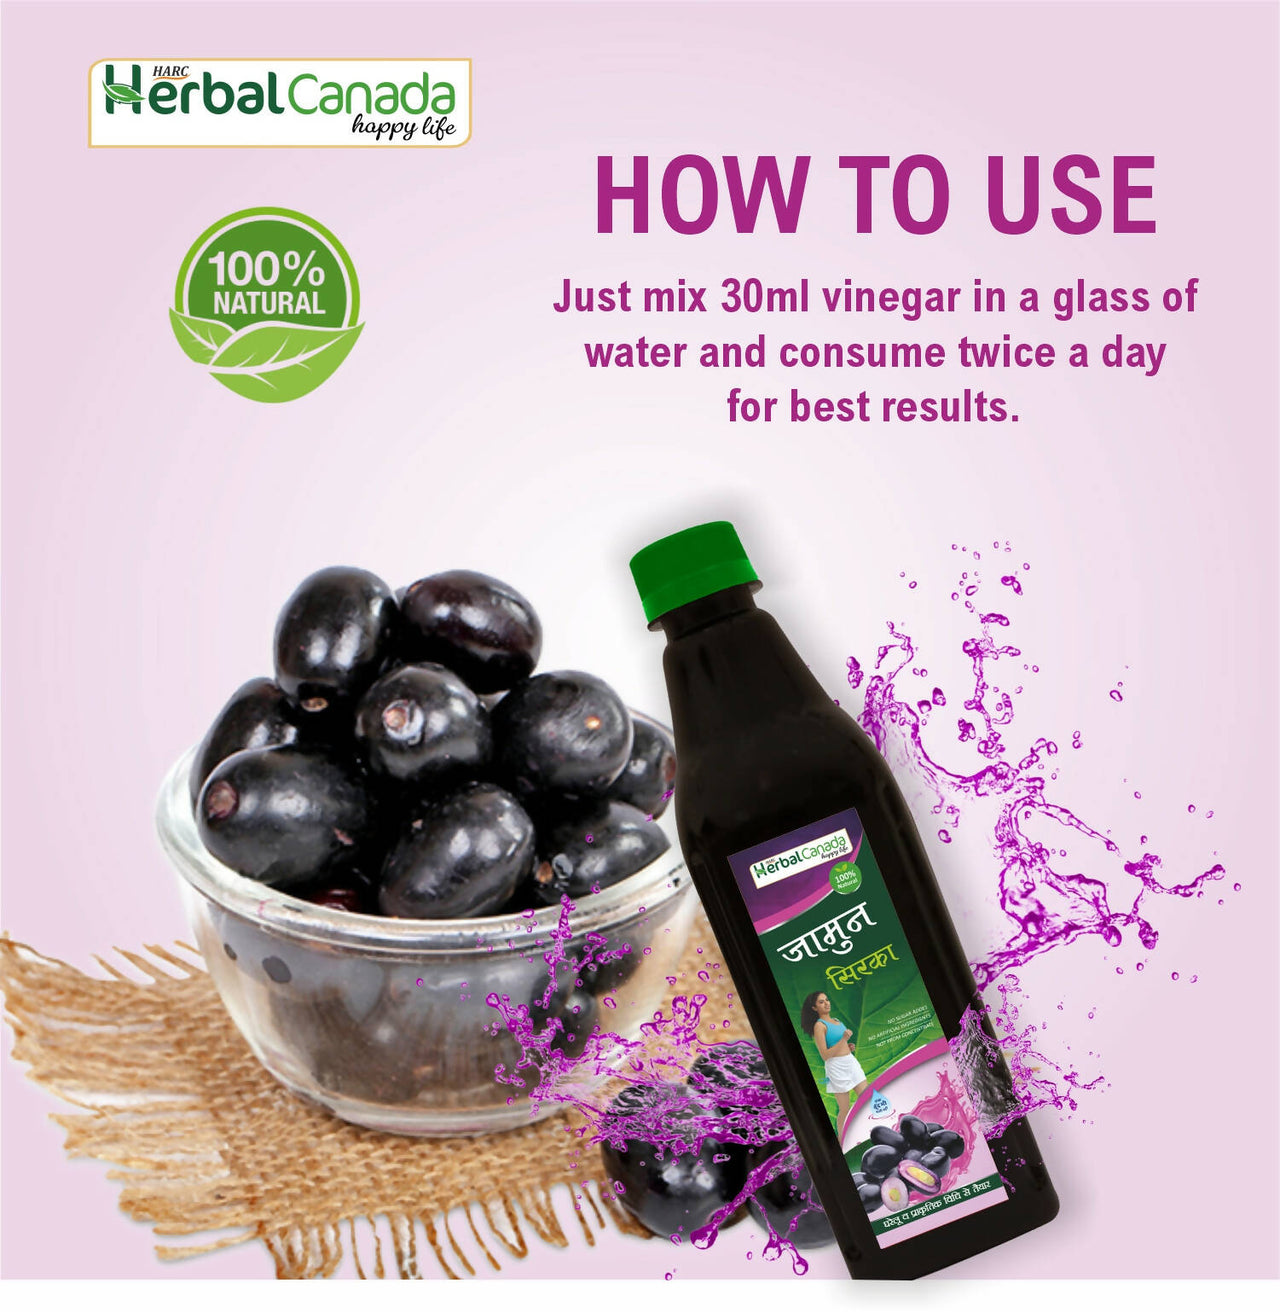 Herbal Canada Jamun Vinegar - Distacart